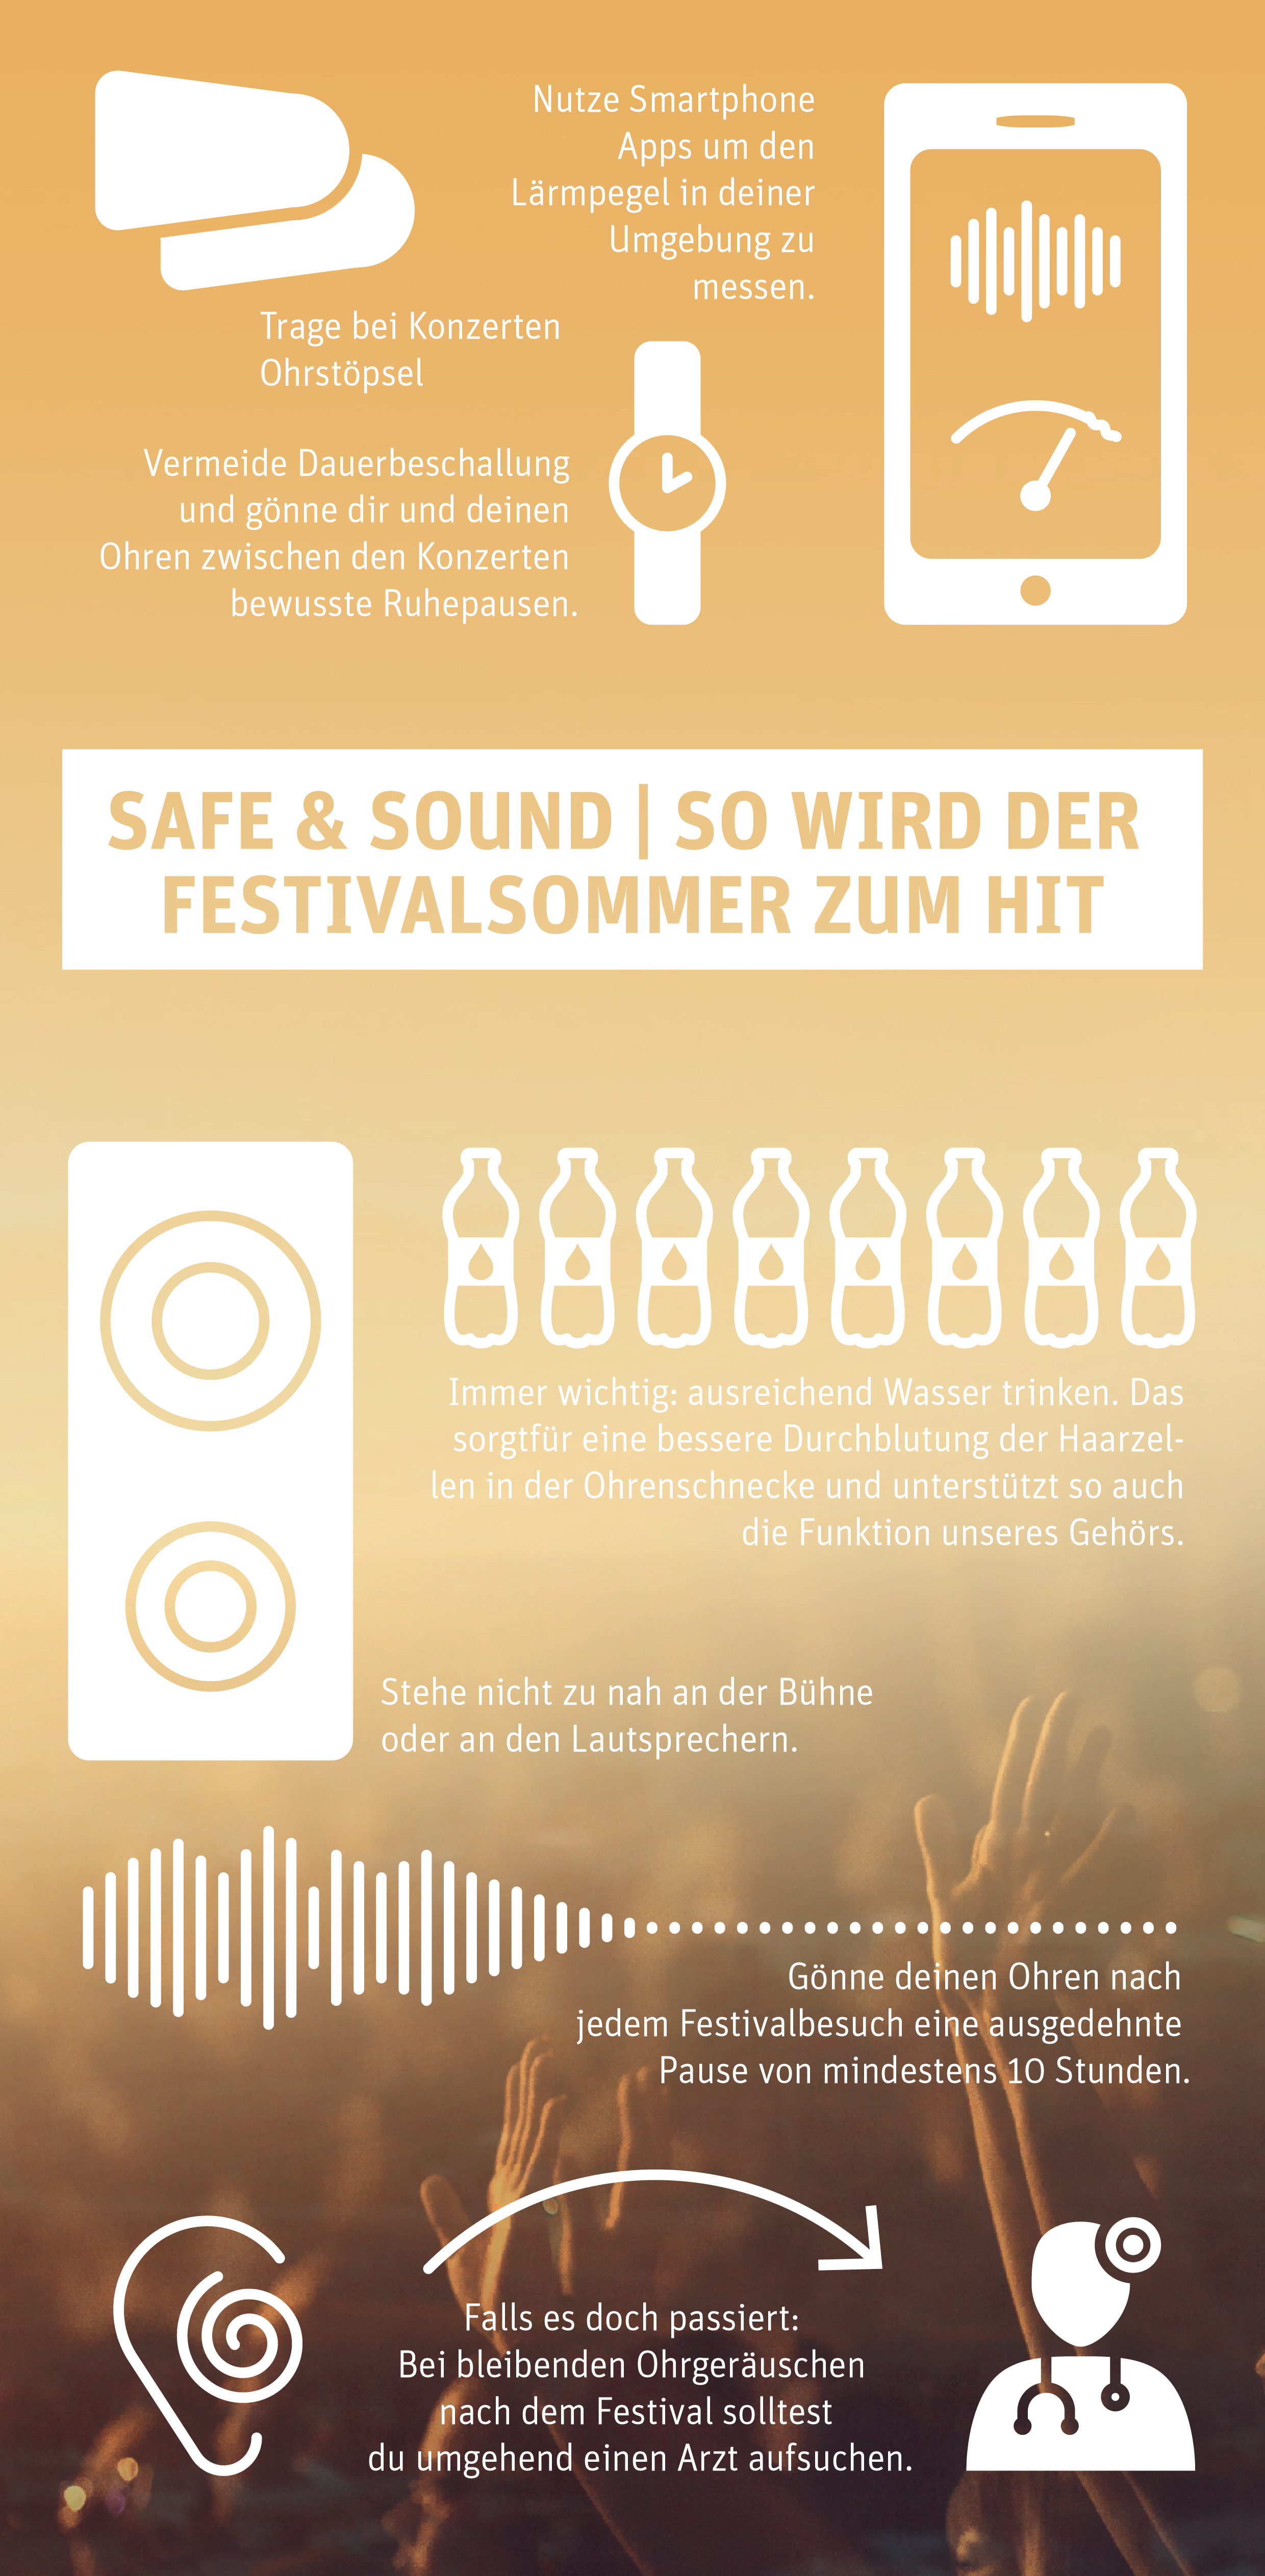 Festival-season-tips-to-keep-the-hearing-safe-Hear-the-World-Foundation-02